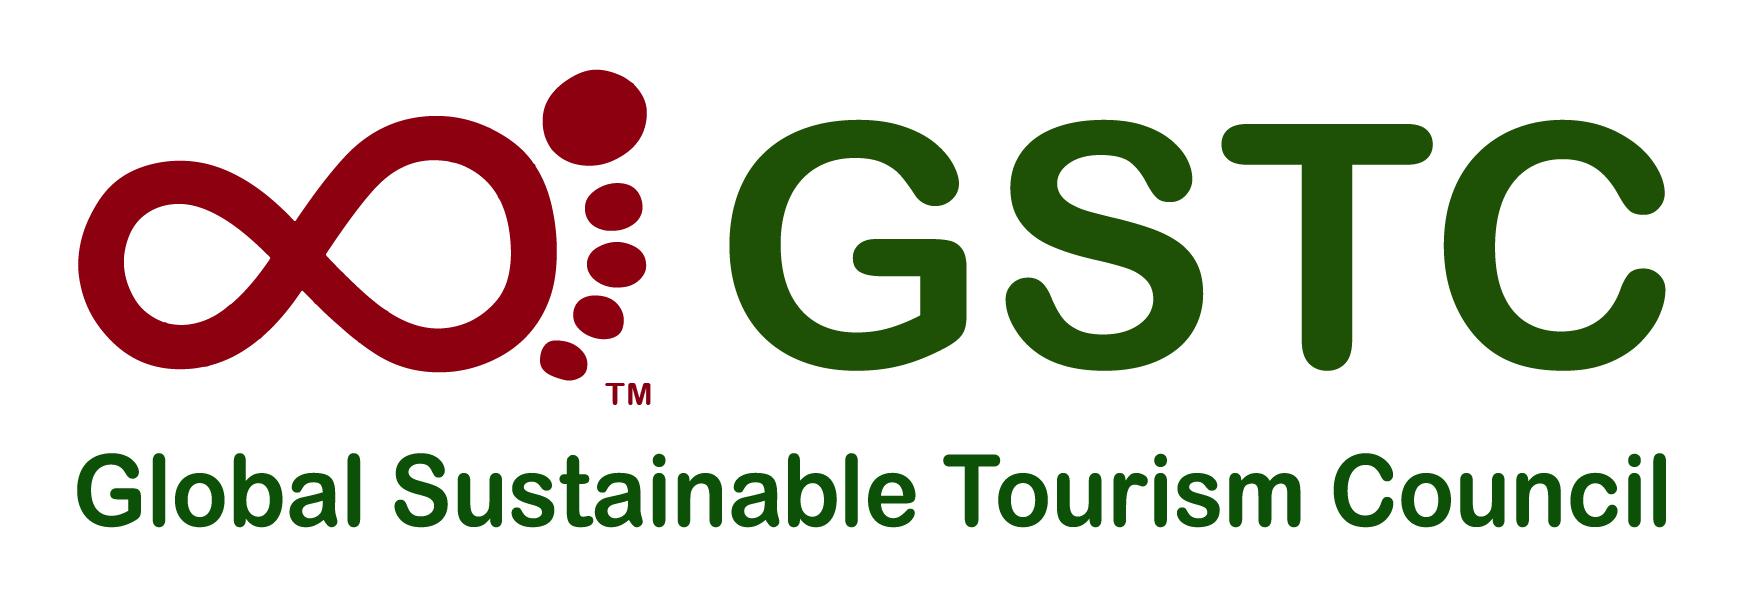 América - Global Sustainable Tourism Council (GSTC)